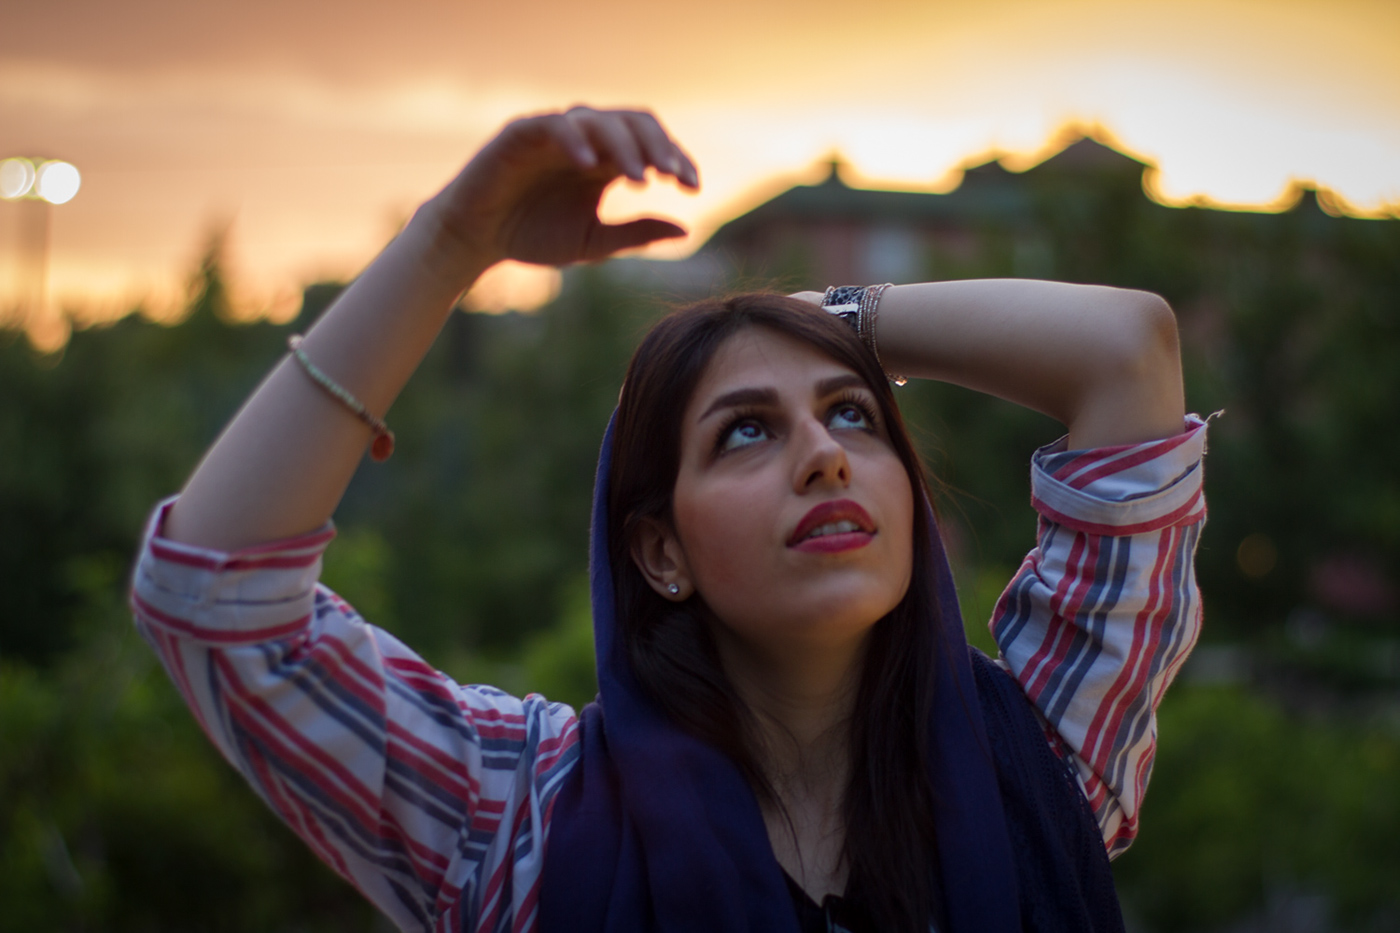 ariarezaiefar Modeling photography modeling emotion Emotional alireza ghorbani 50mm ziess Tehran Iran